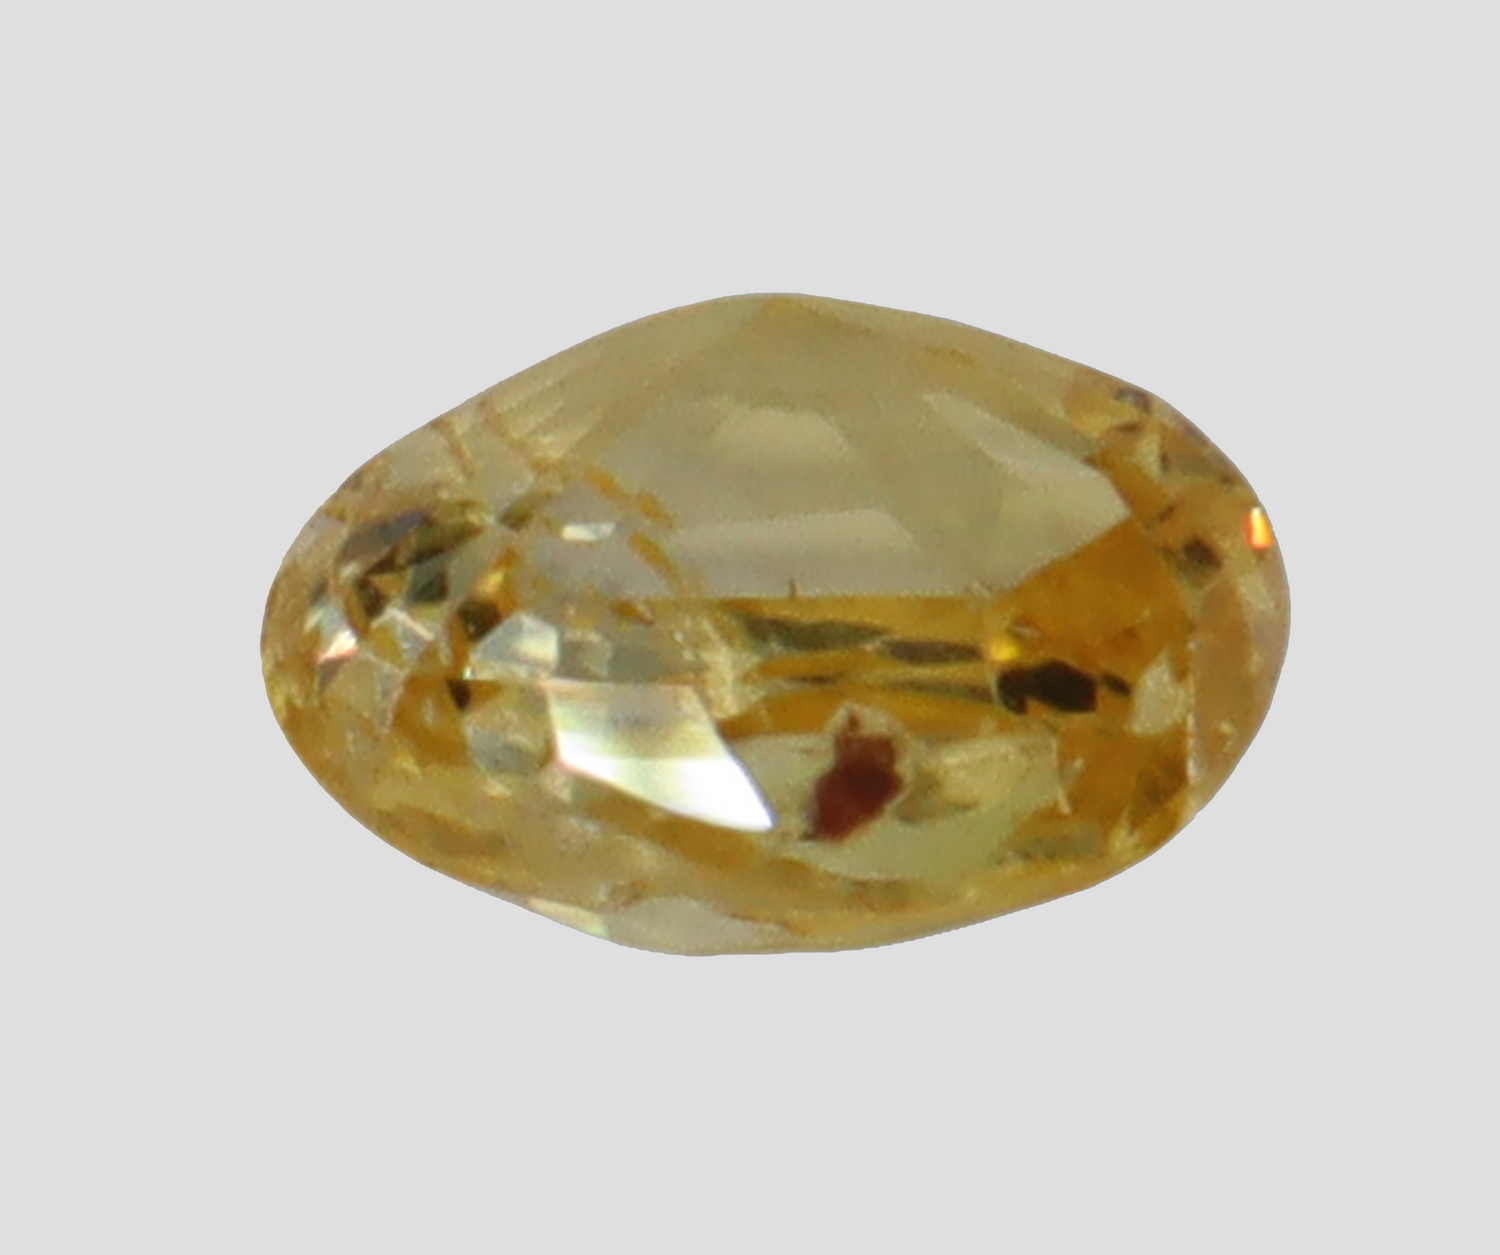 Yellow Sapphire - 4.45 Carats